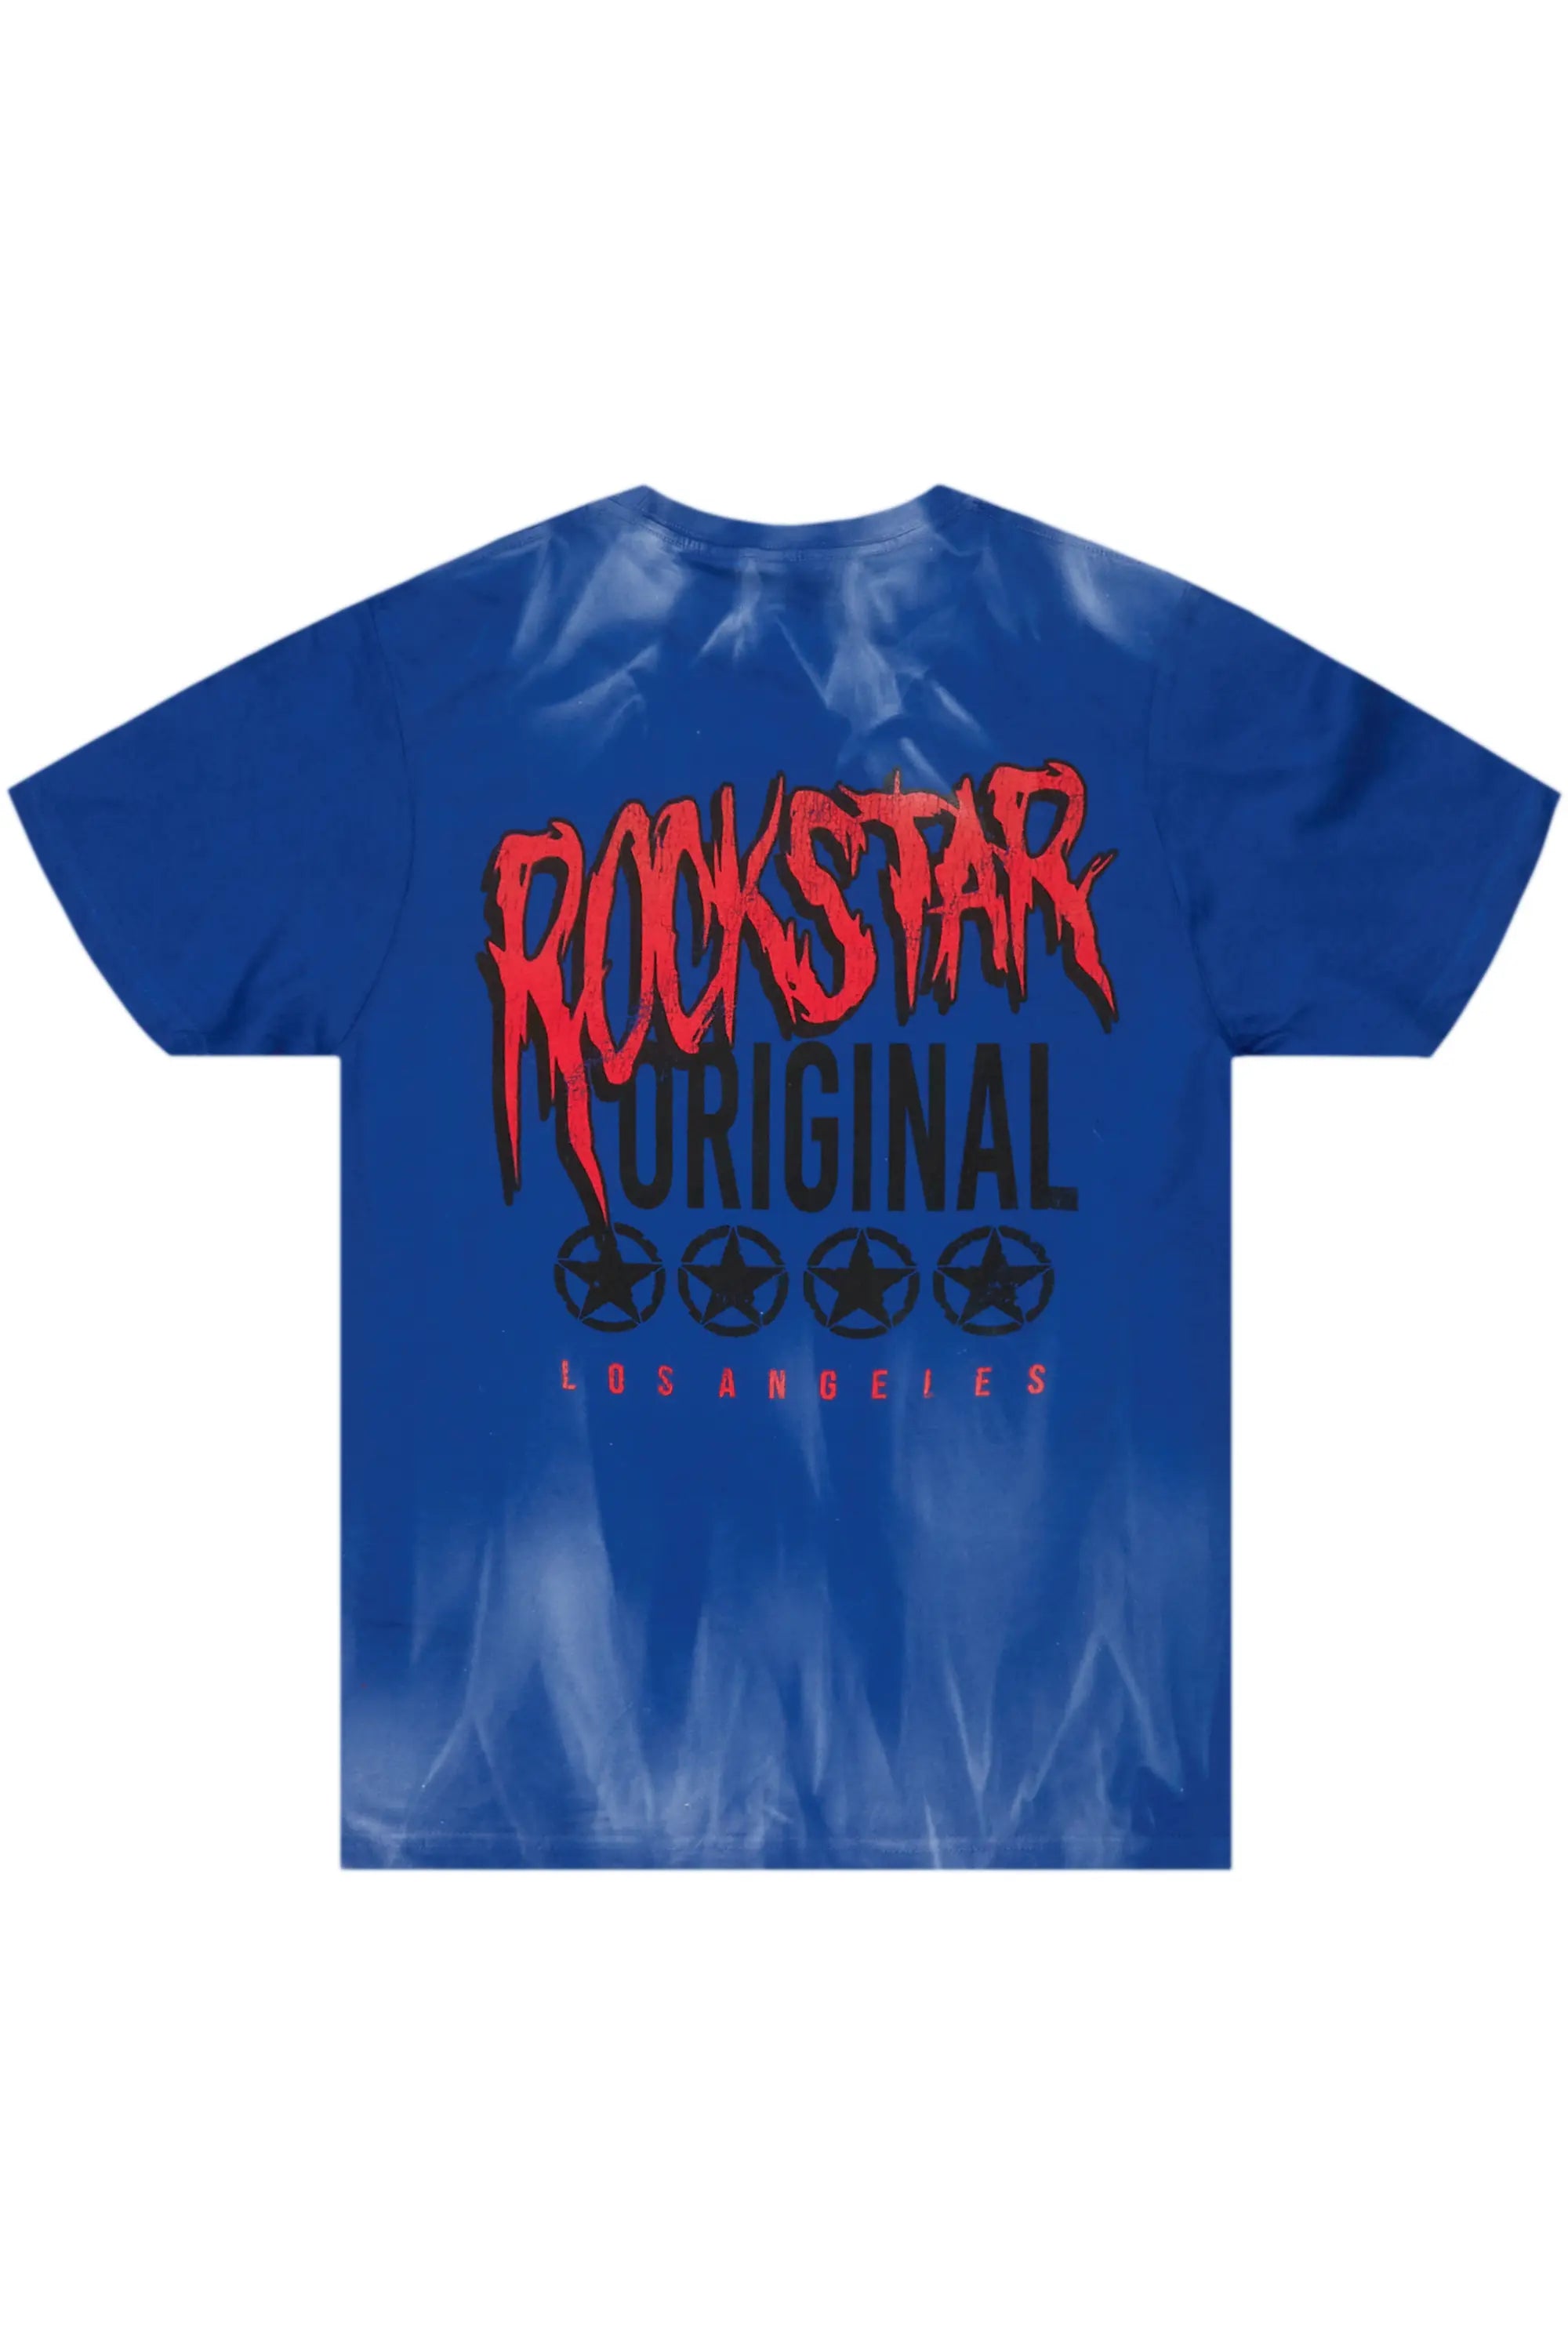 Wizzurd Royal Blue Graphic T-Shirt